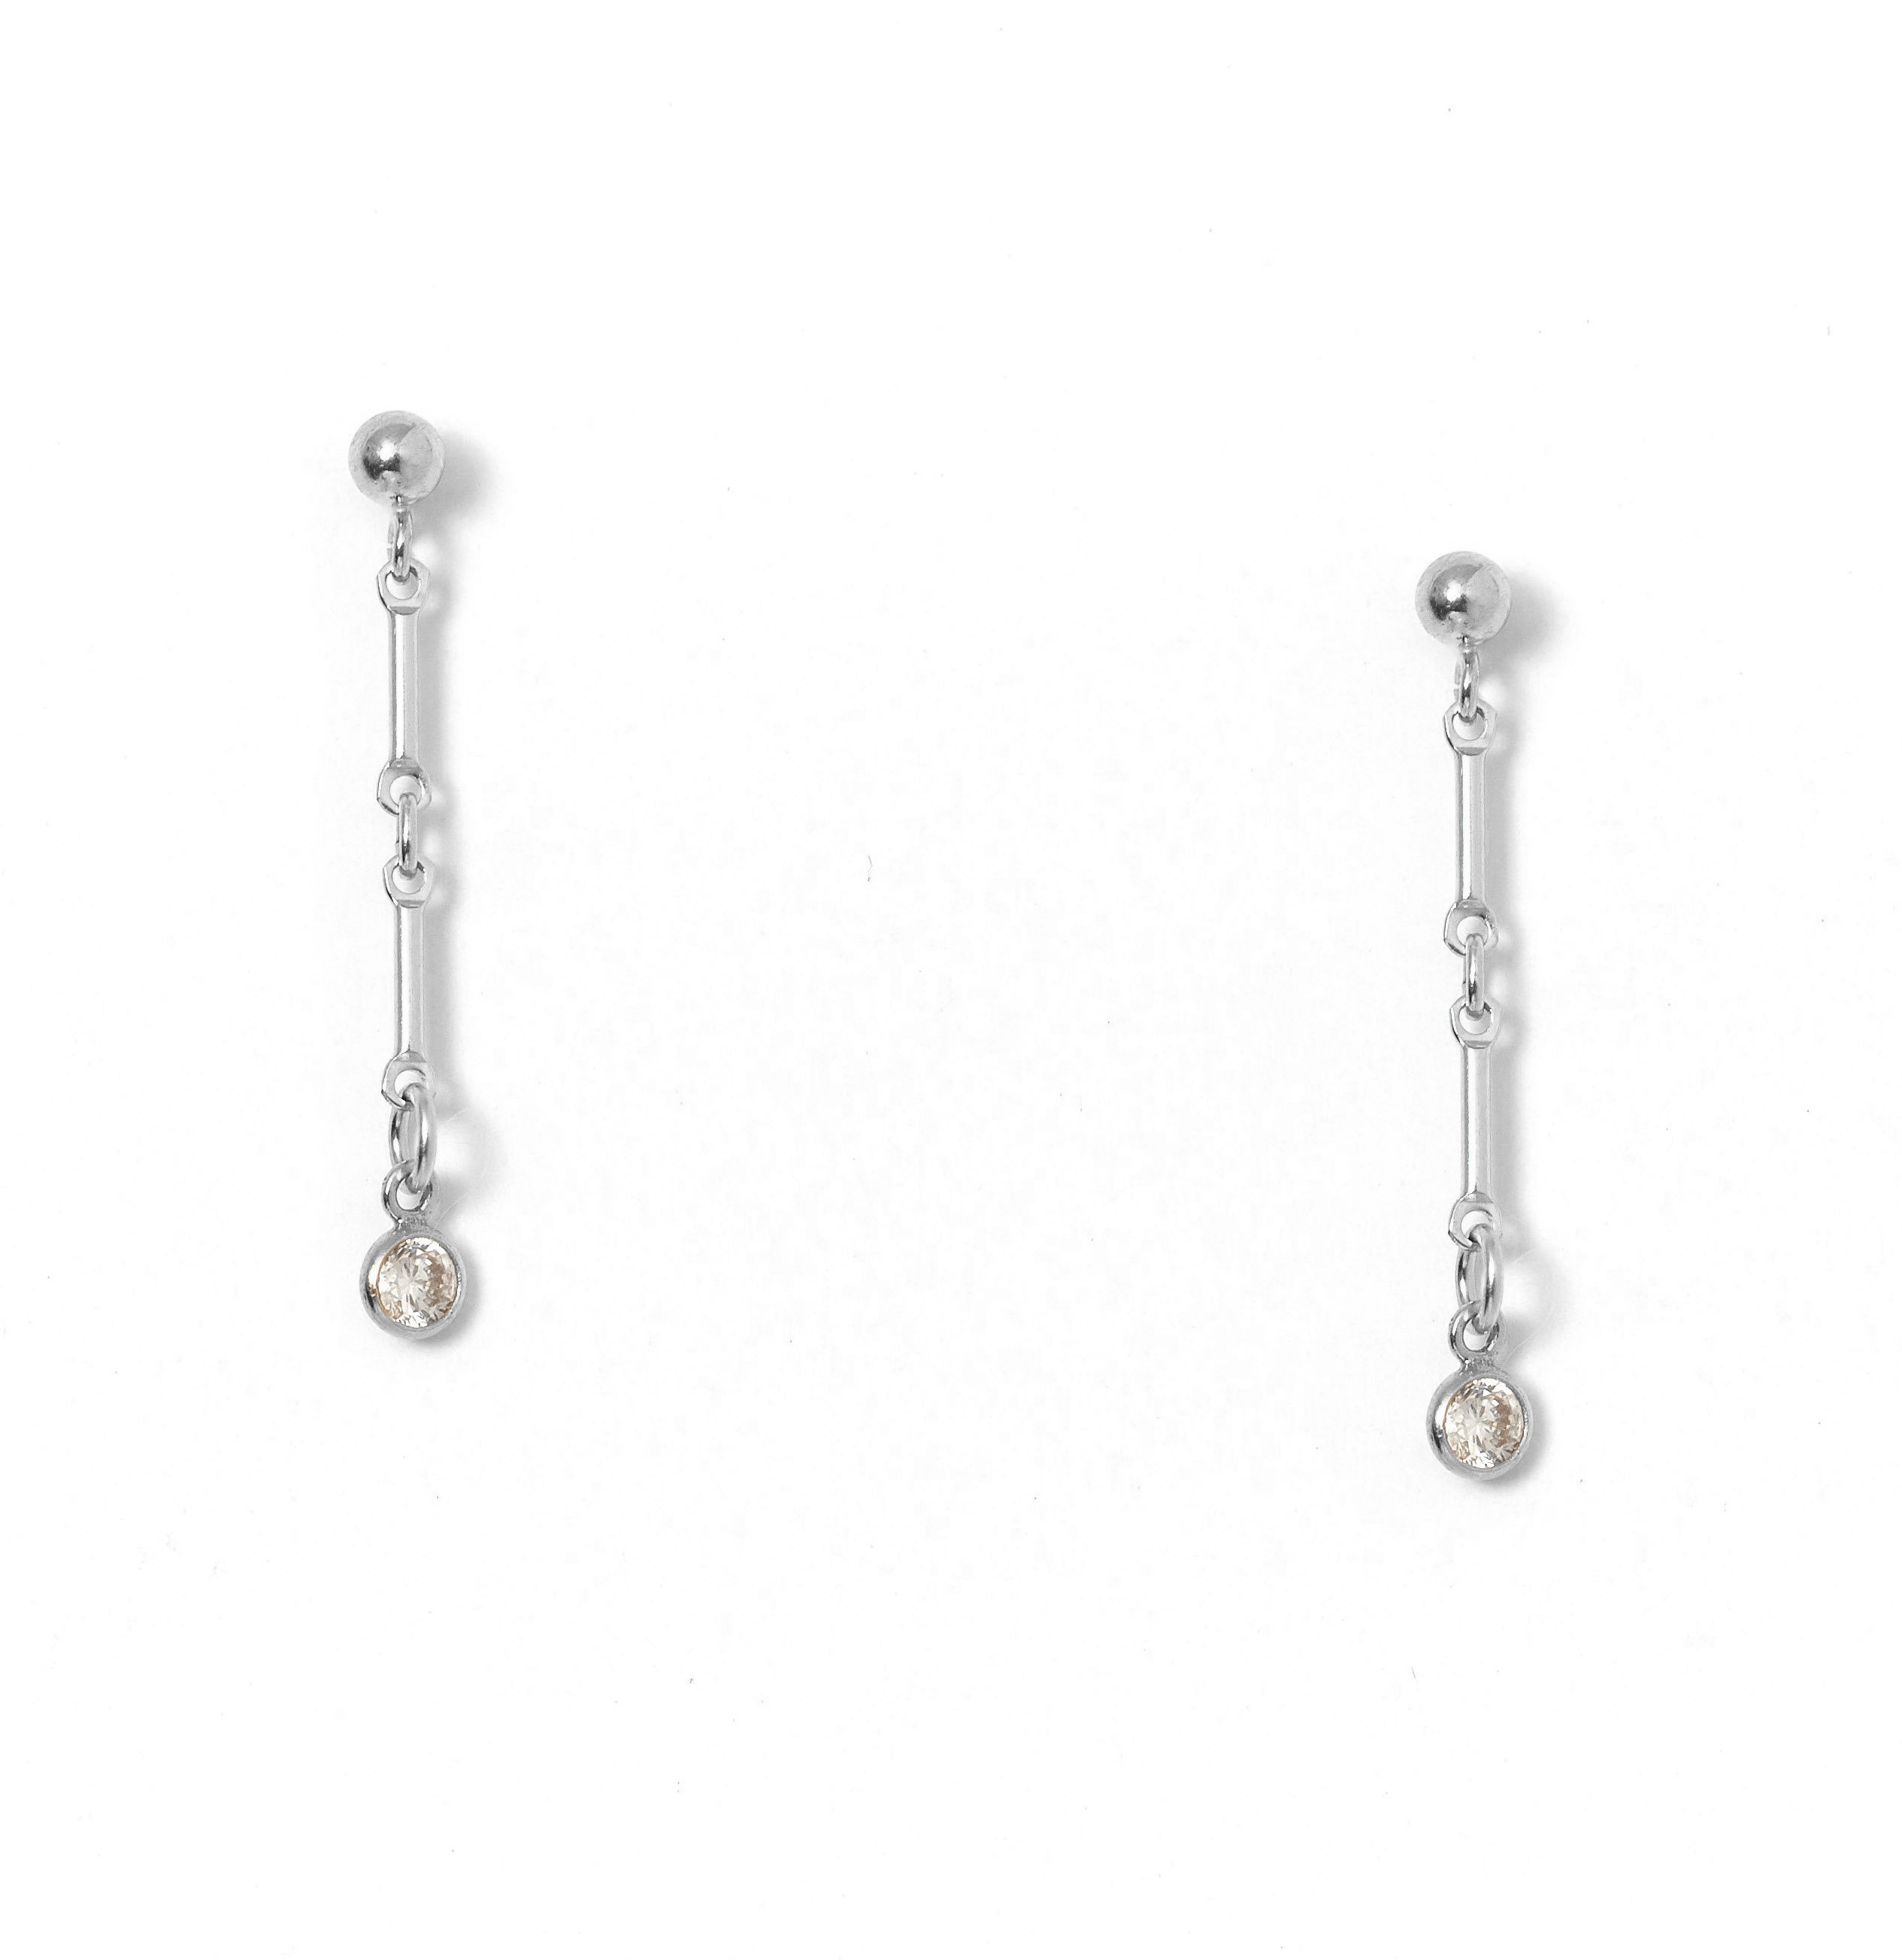 Desos Earrings by KOZAKH. 2 inch drop, 3mm Ball stud earrings, crafted in Sterling Silver, featuring a 3mm Swarovski Crystal bezel.